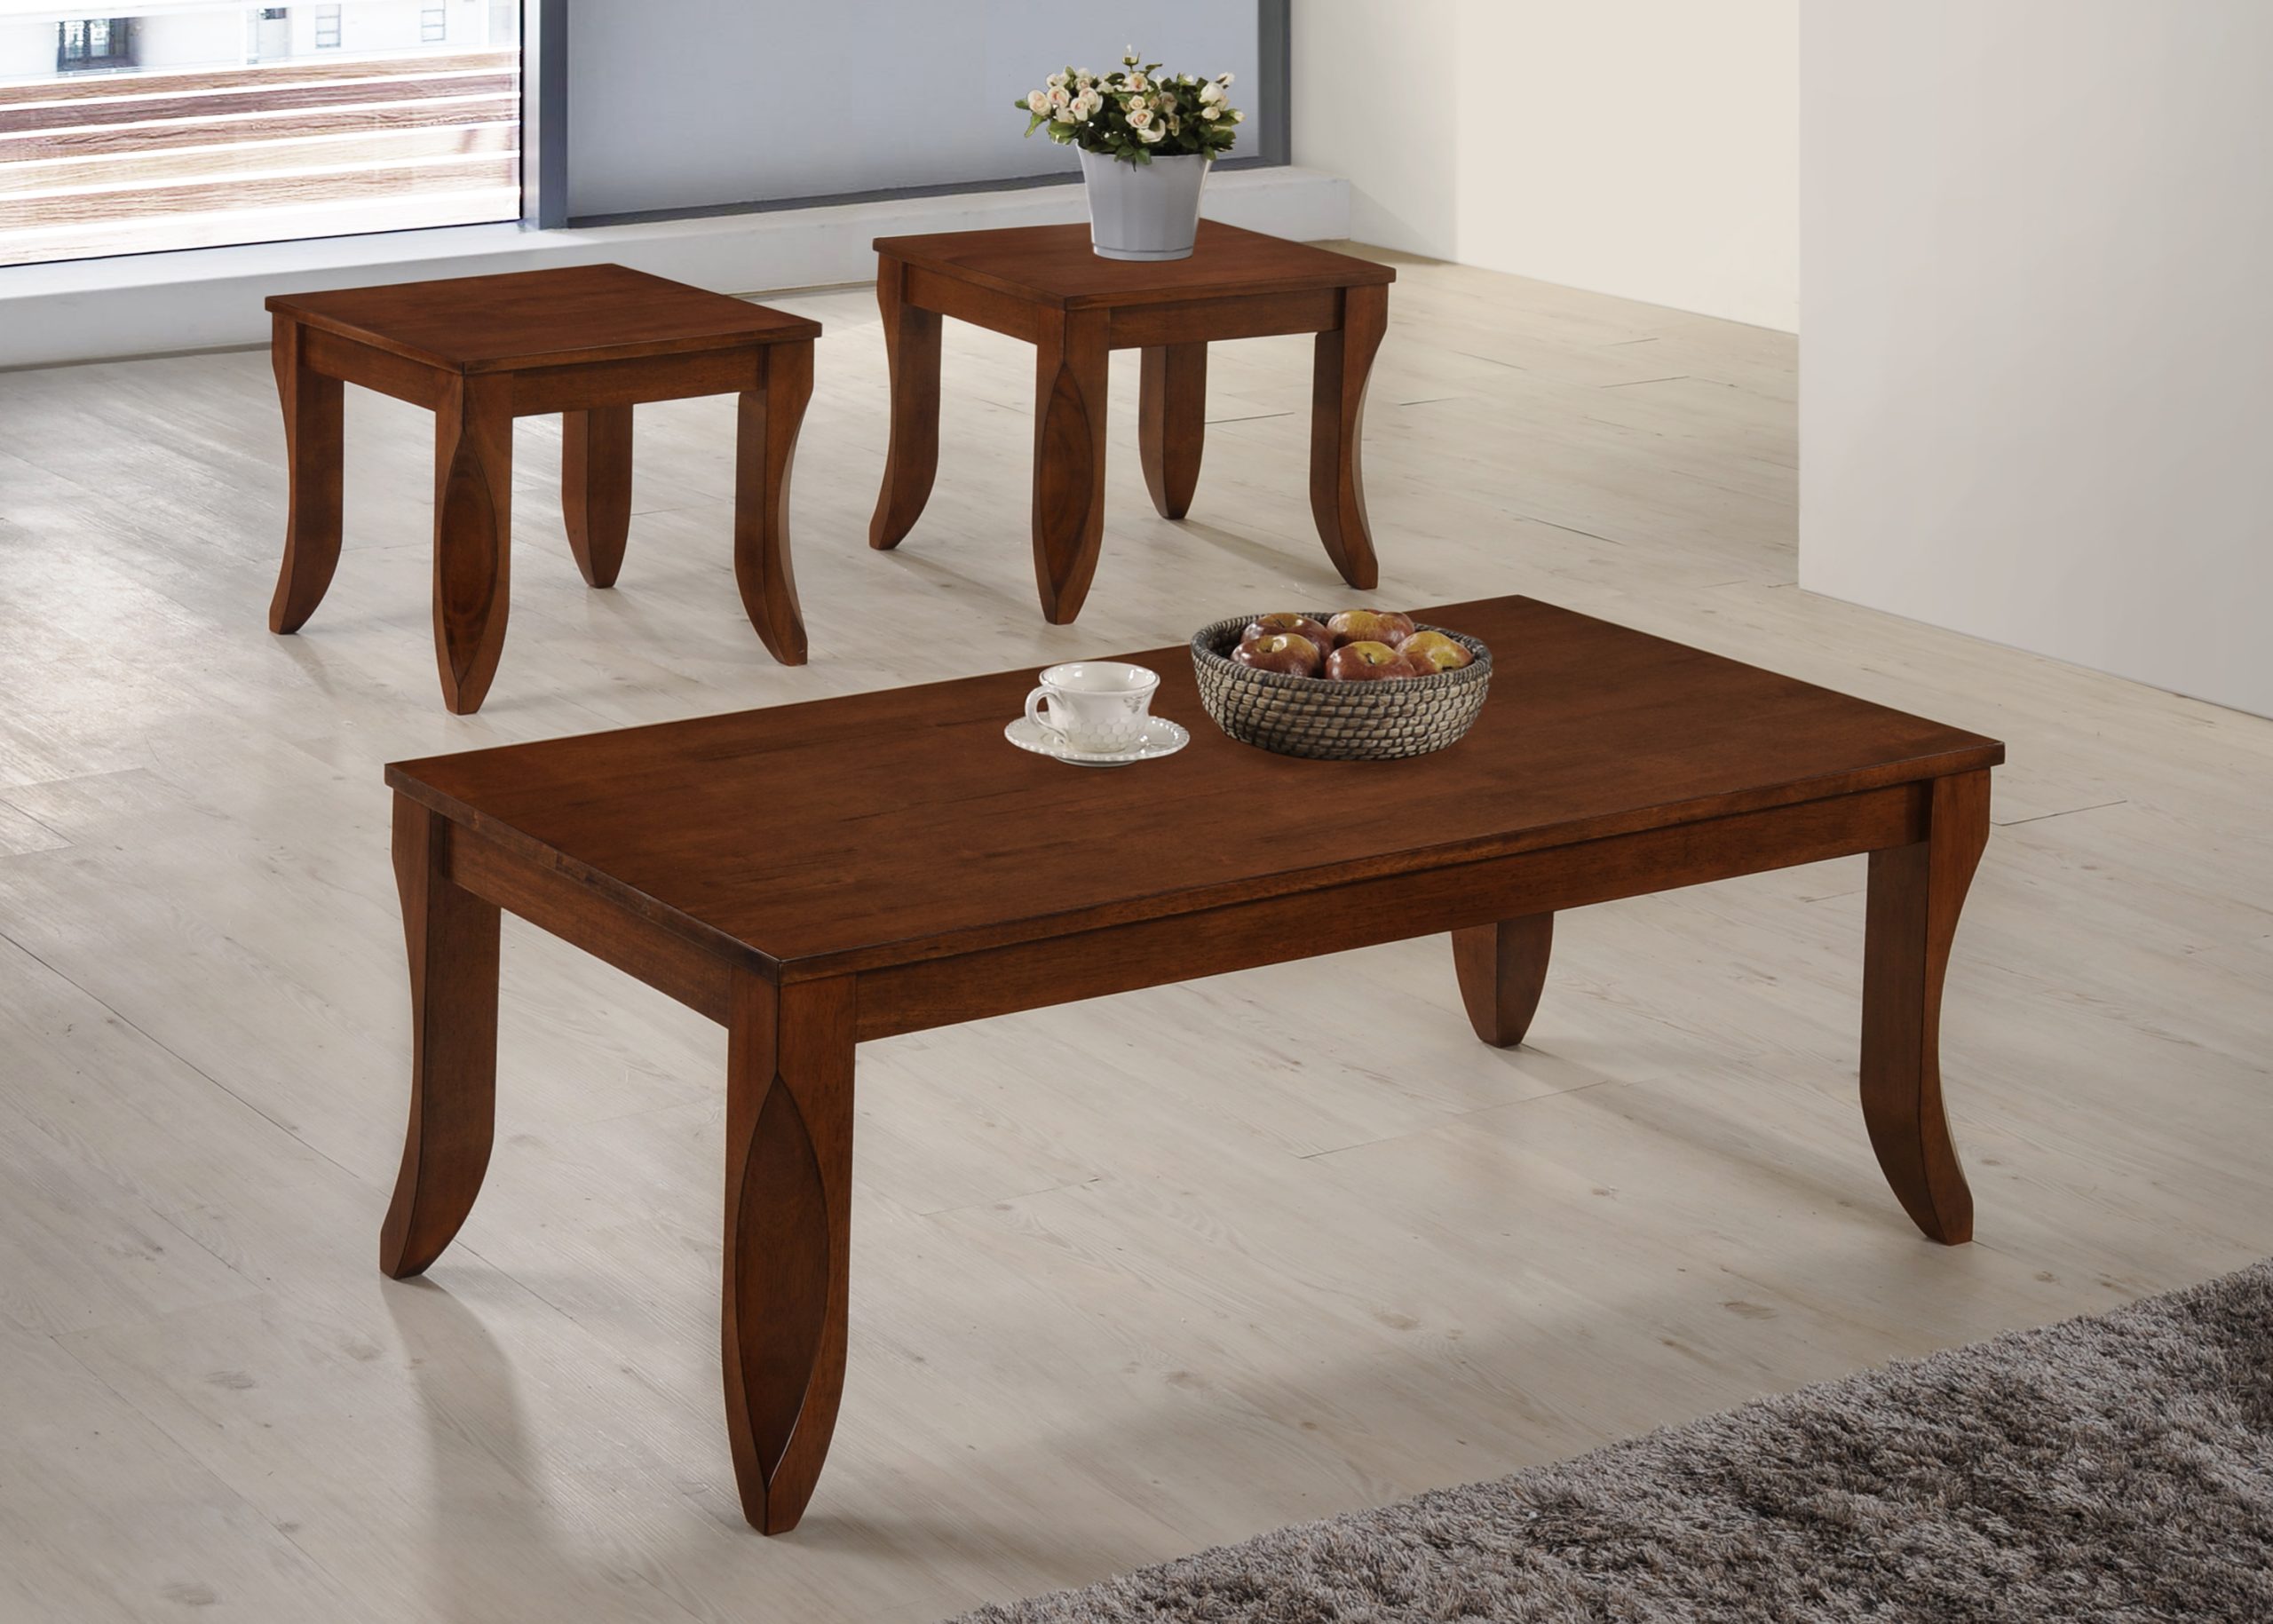 Arabica Coffee Table Set